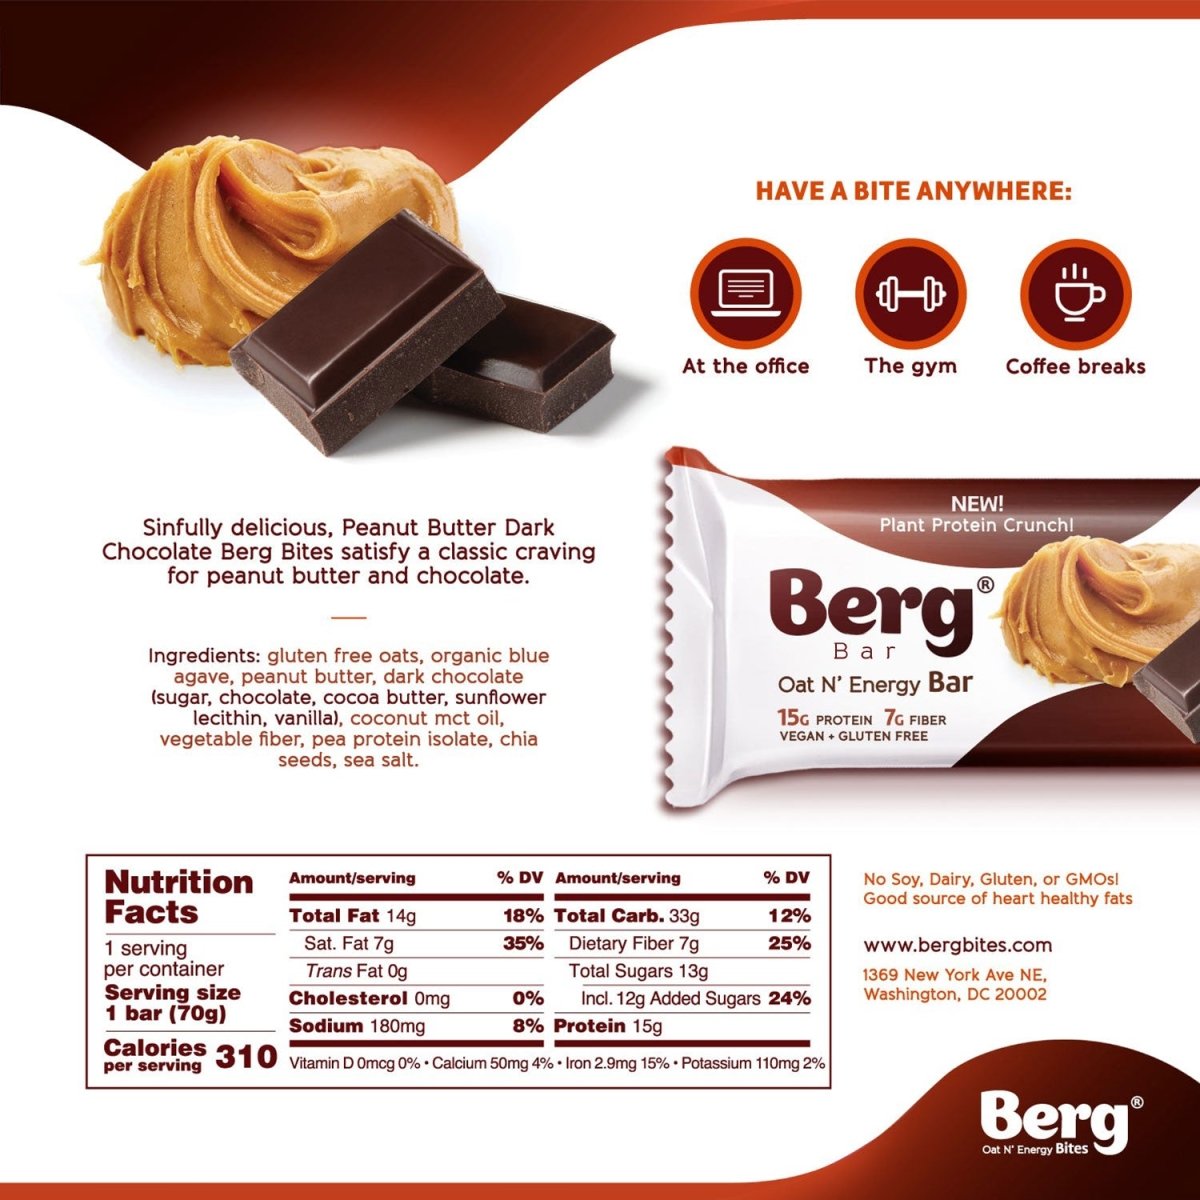 Dark Chocolate Peanut Butter Protein Snack Bars